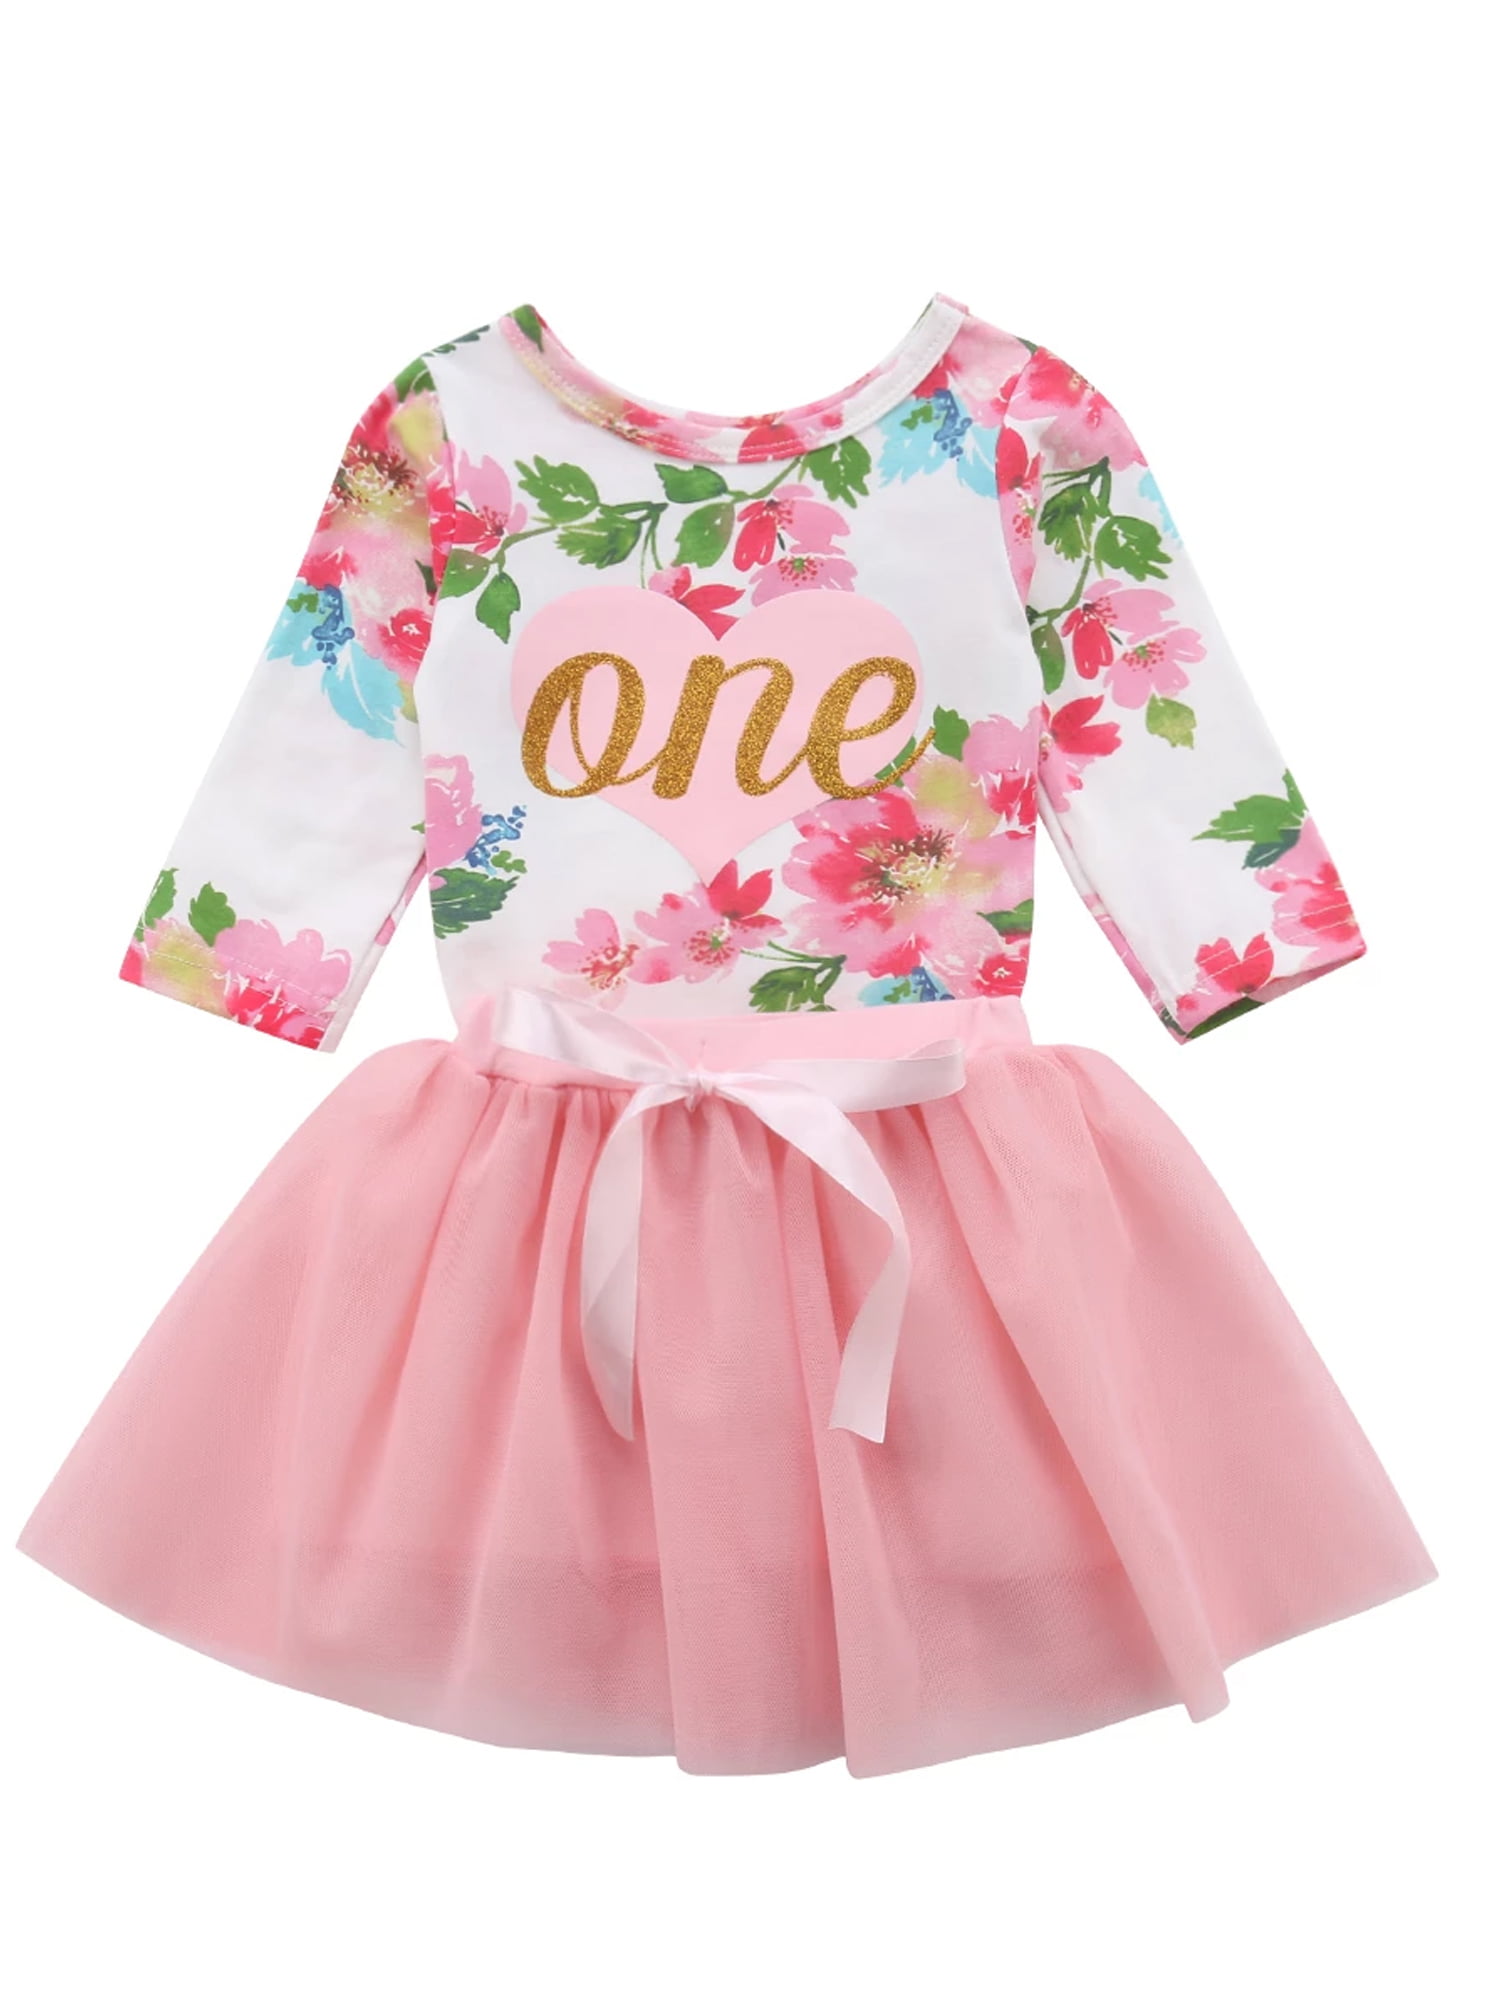 2Pc Baby Girls' 1st Birthday Tutu Dress Sleeveless Floral Romper Top Lace Skirt 